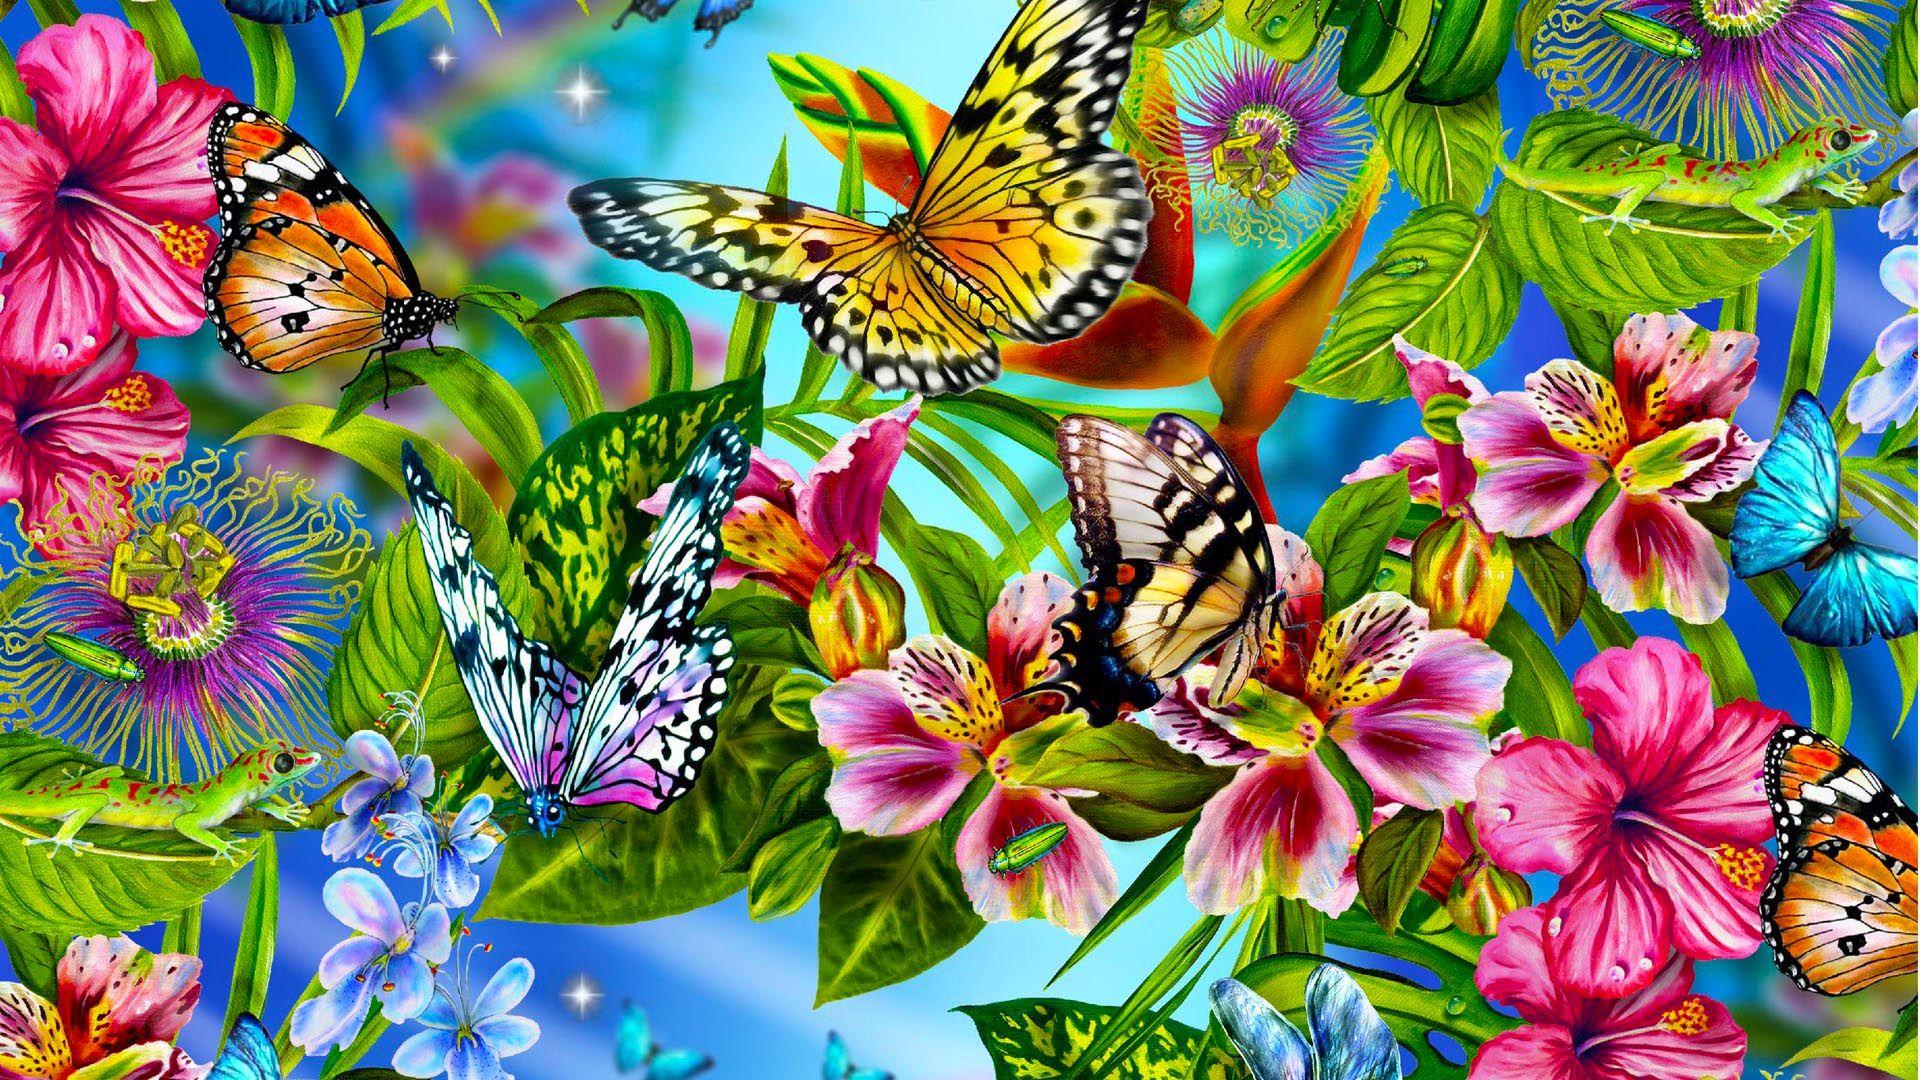 V.82: Butterfly Wallpapers, HD Image of Butterfly, Ultra HD 4K